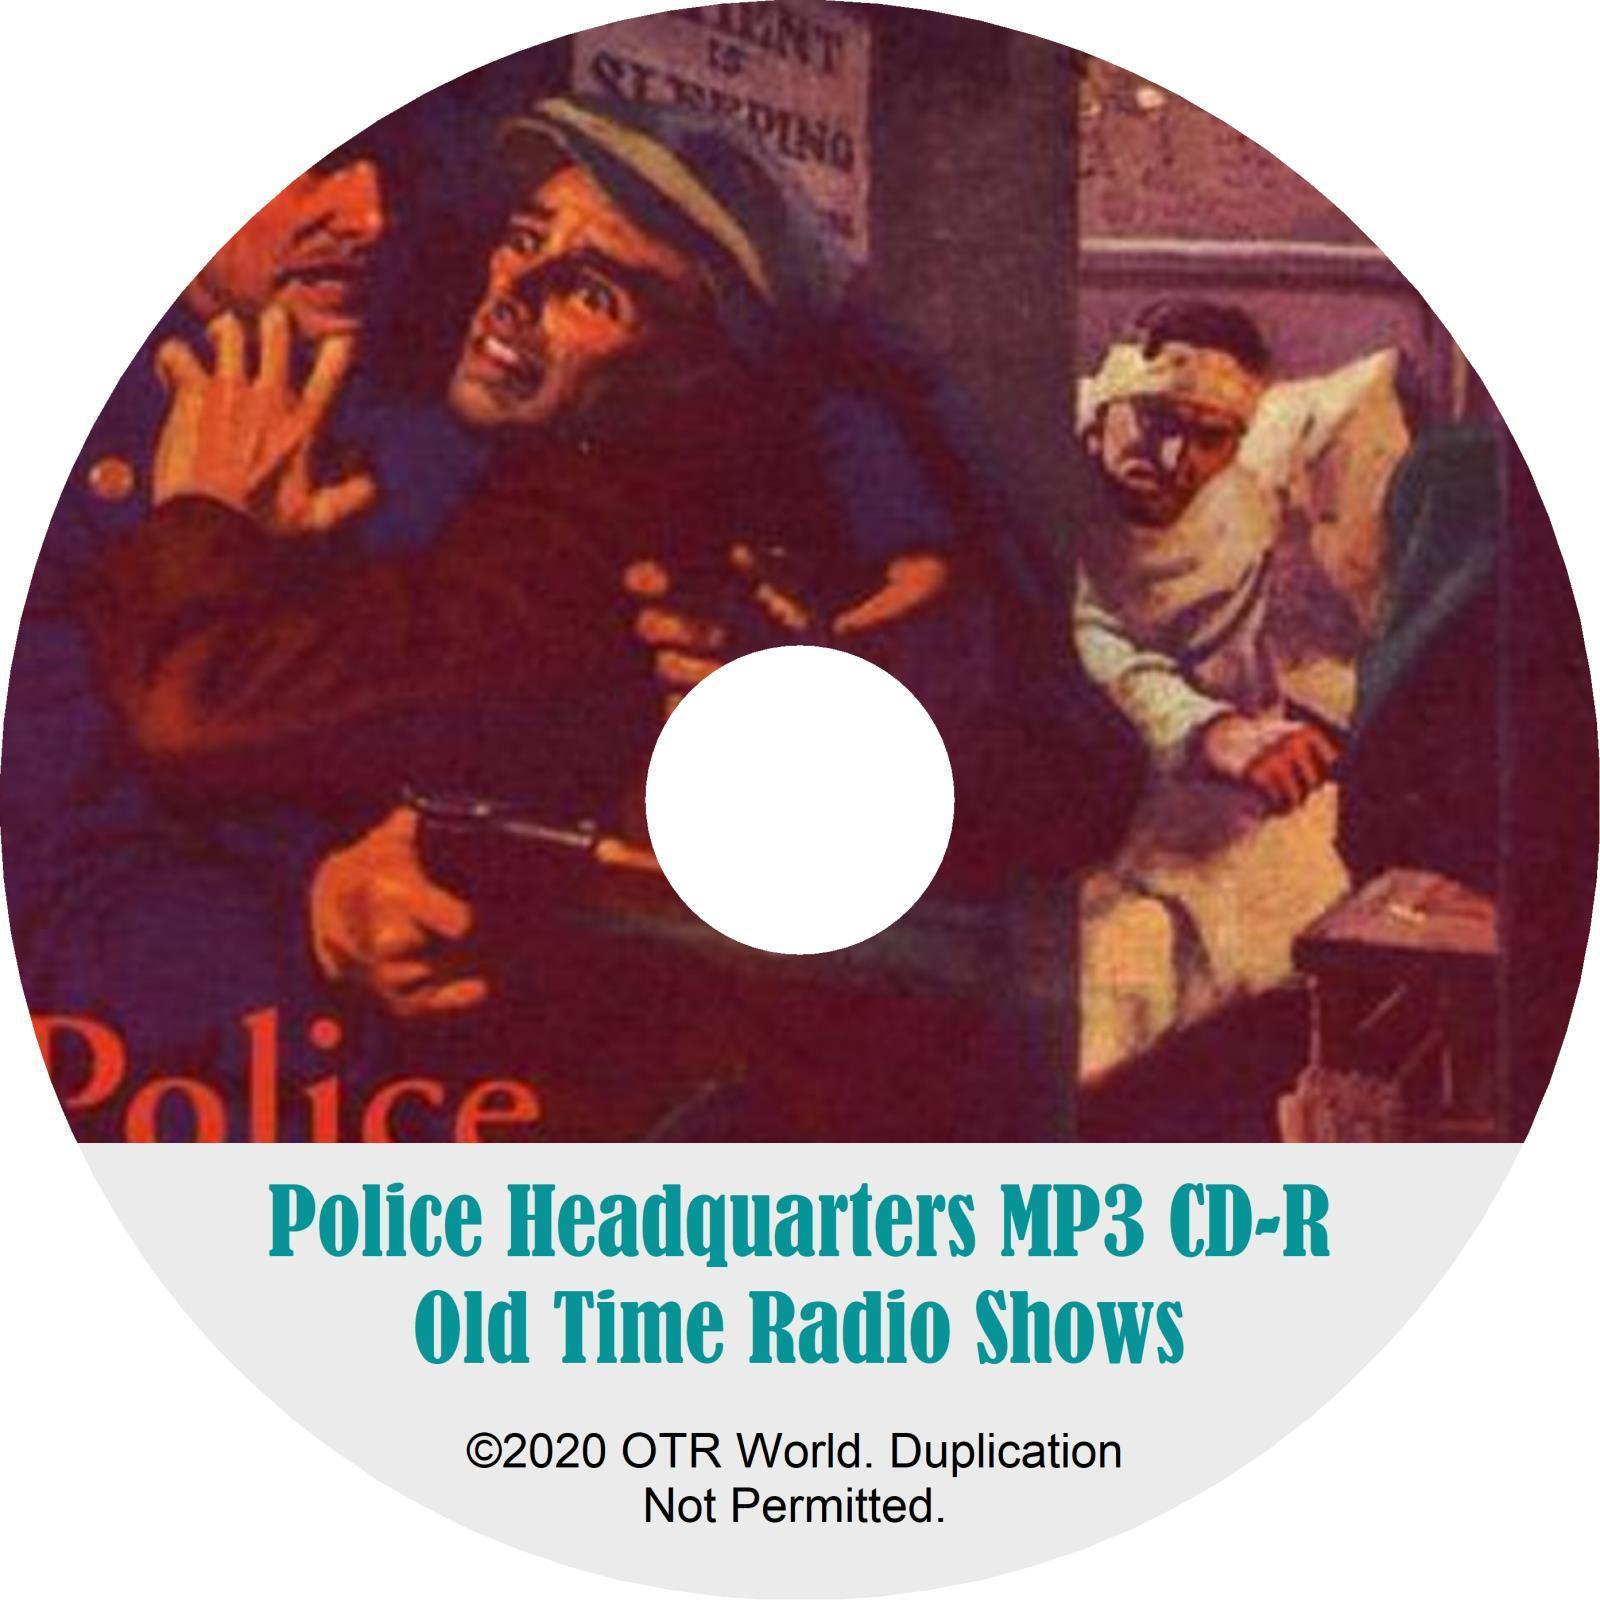 Police Headquarters OTR Old Time Radio Shows MP3 On CD 61 Episodes - OTR World